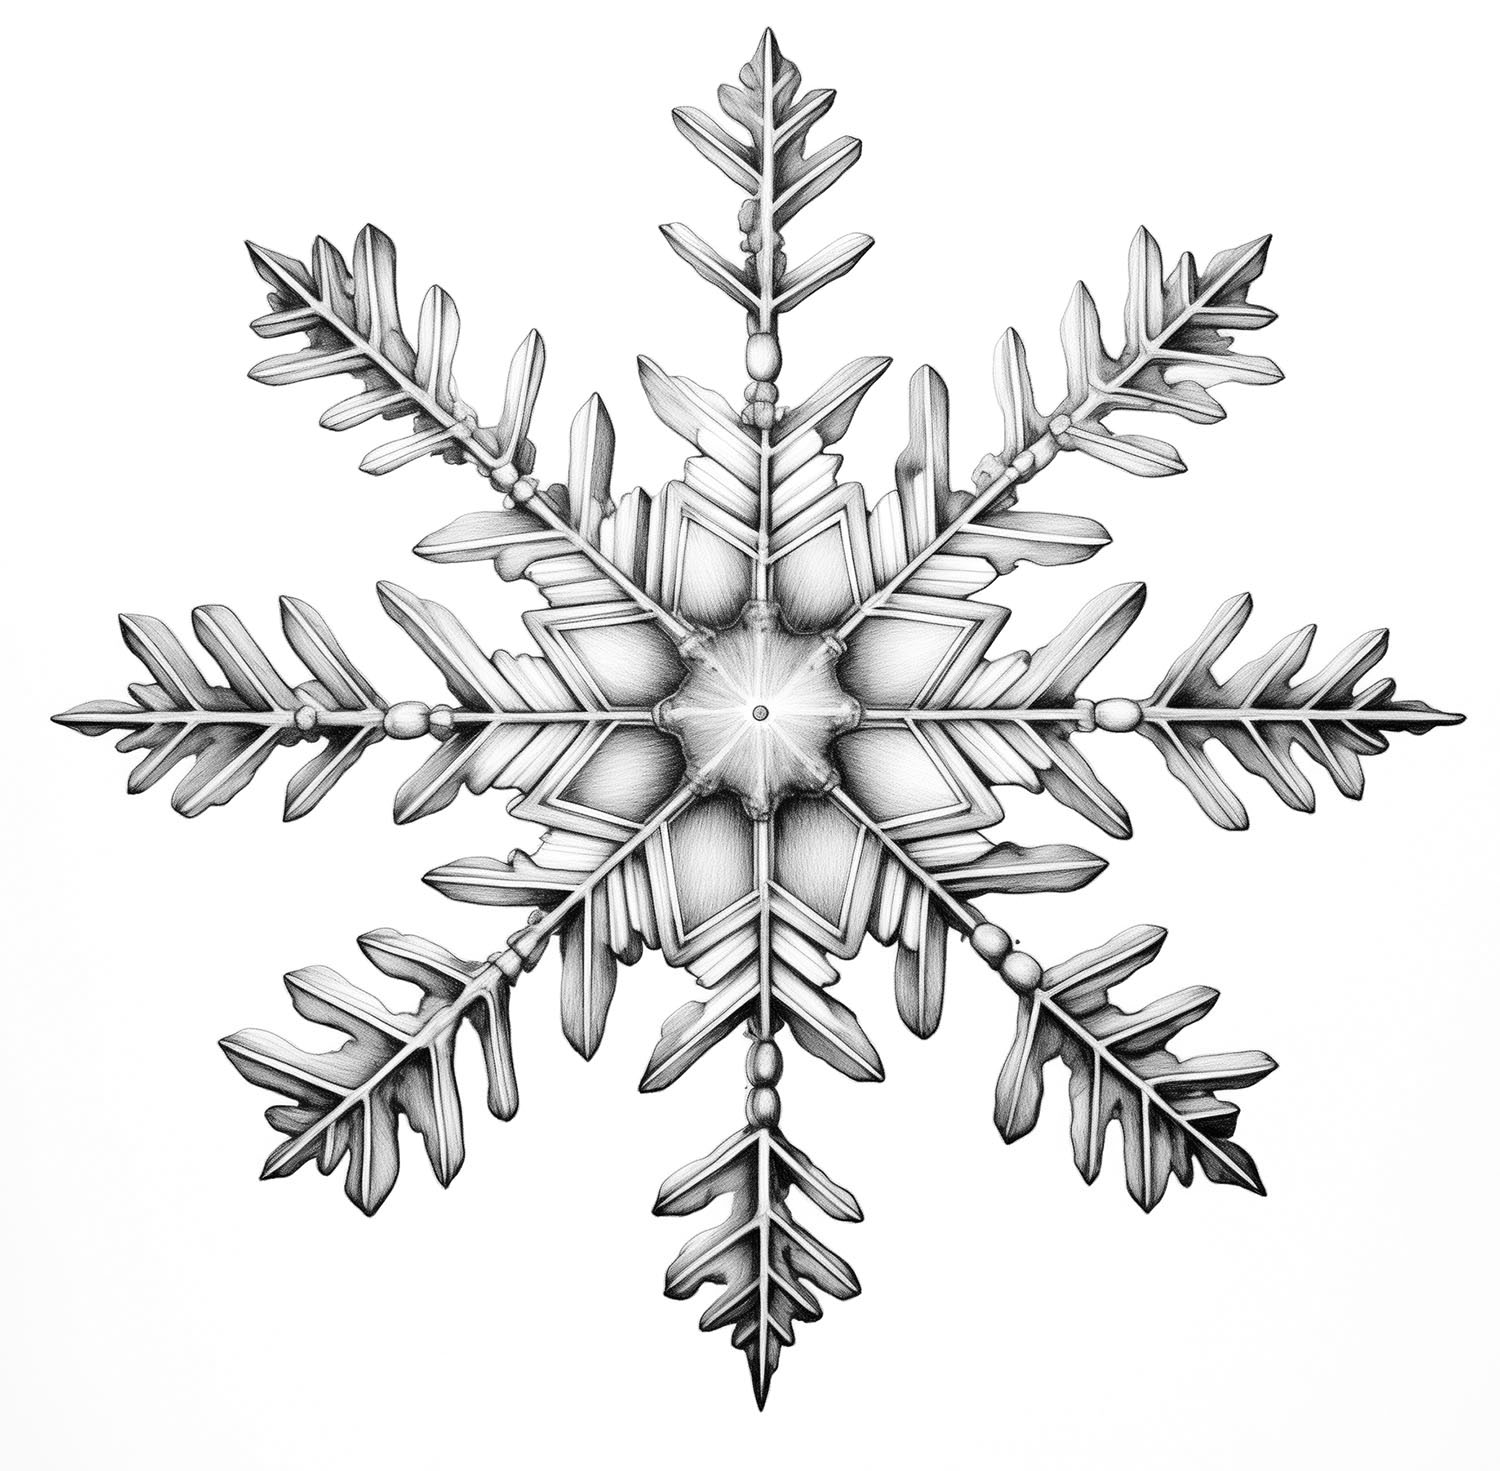 Snow Crystal illustration